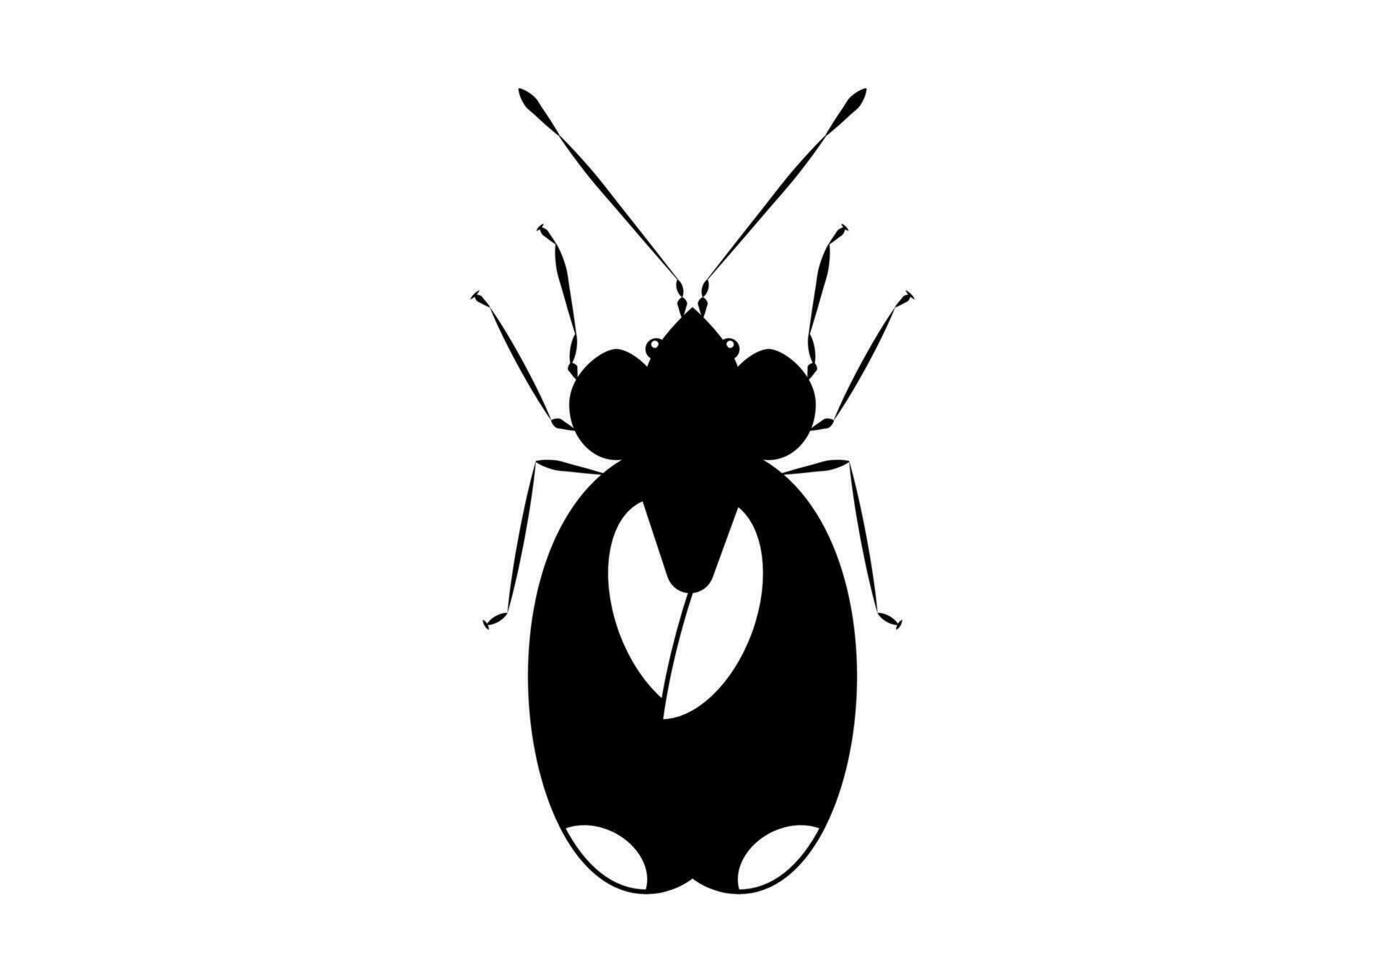 Black and White Bug Stephanitis Pyri isolated on White Background vector